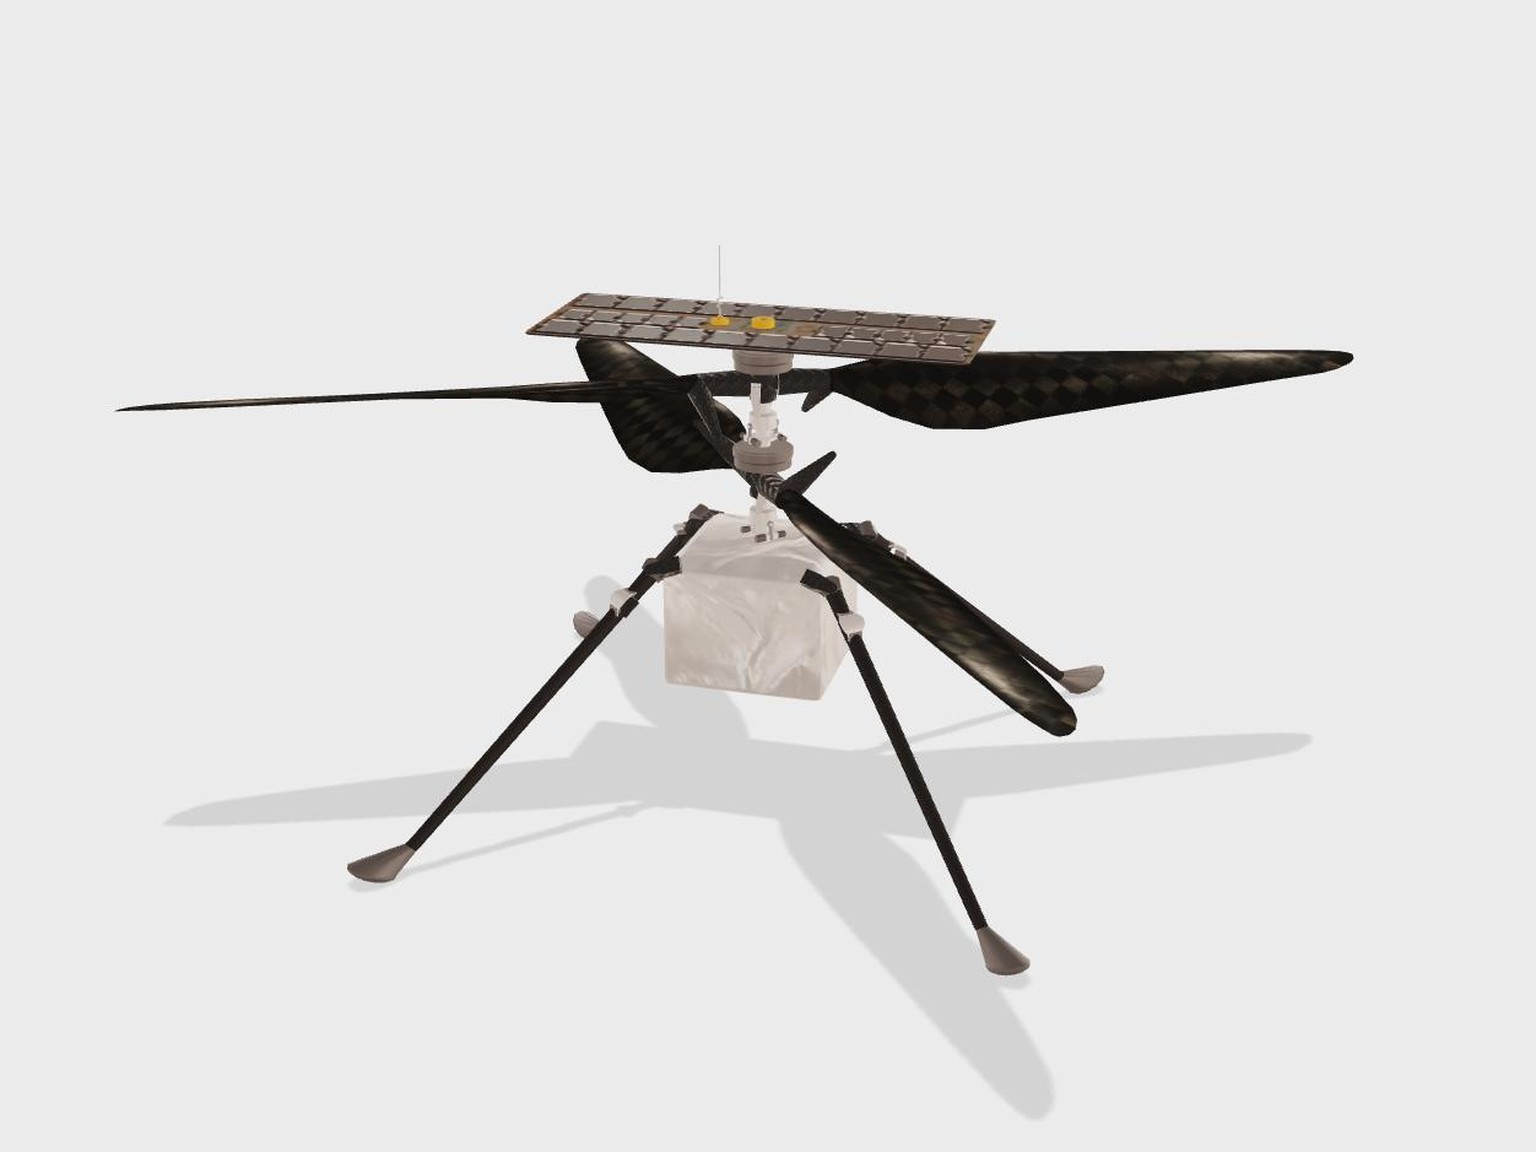 Mars-Helikopter-Drohne Ingenuity, Bild 8